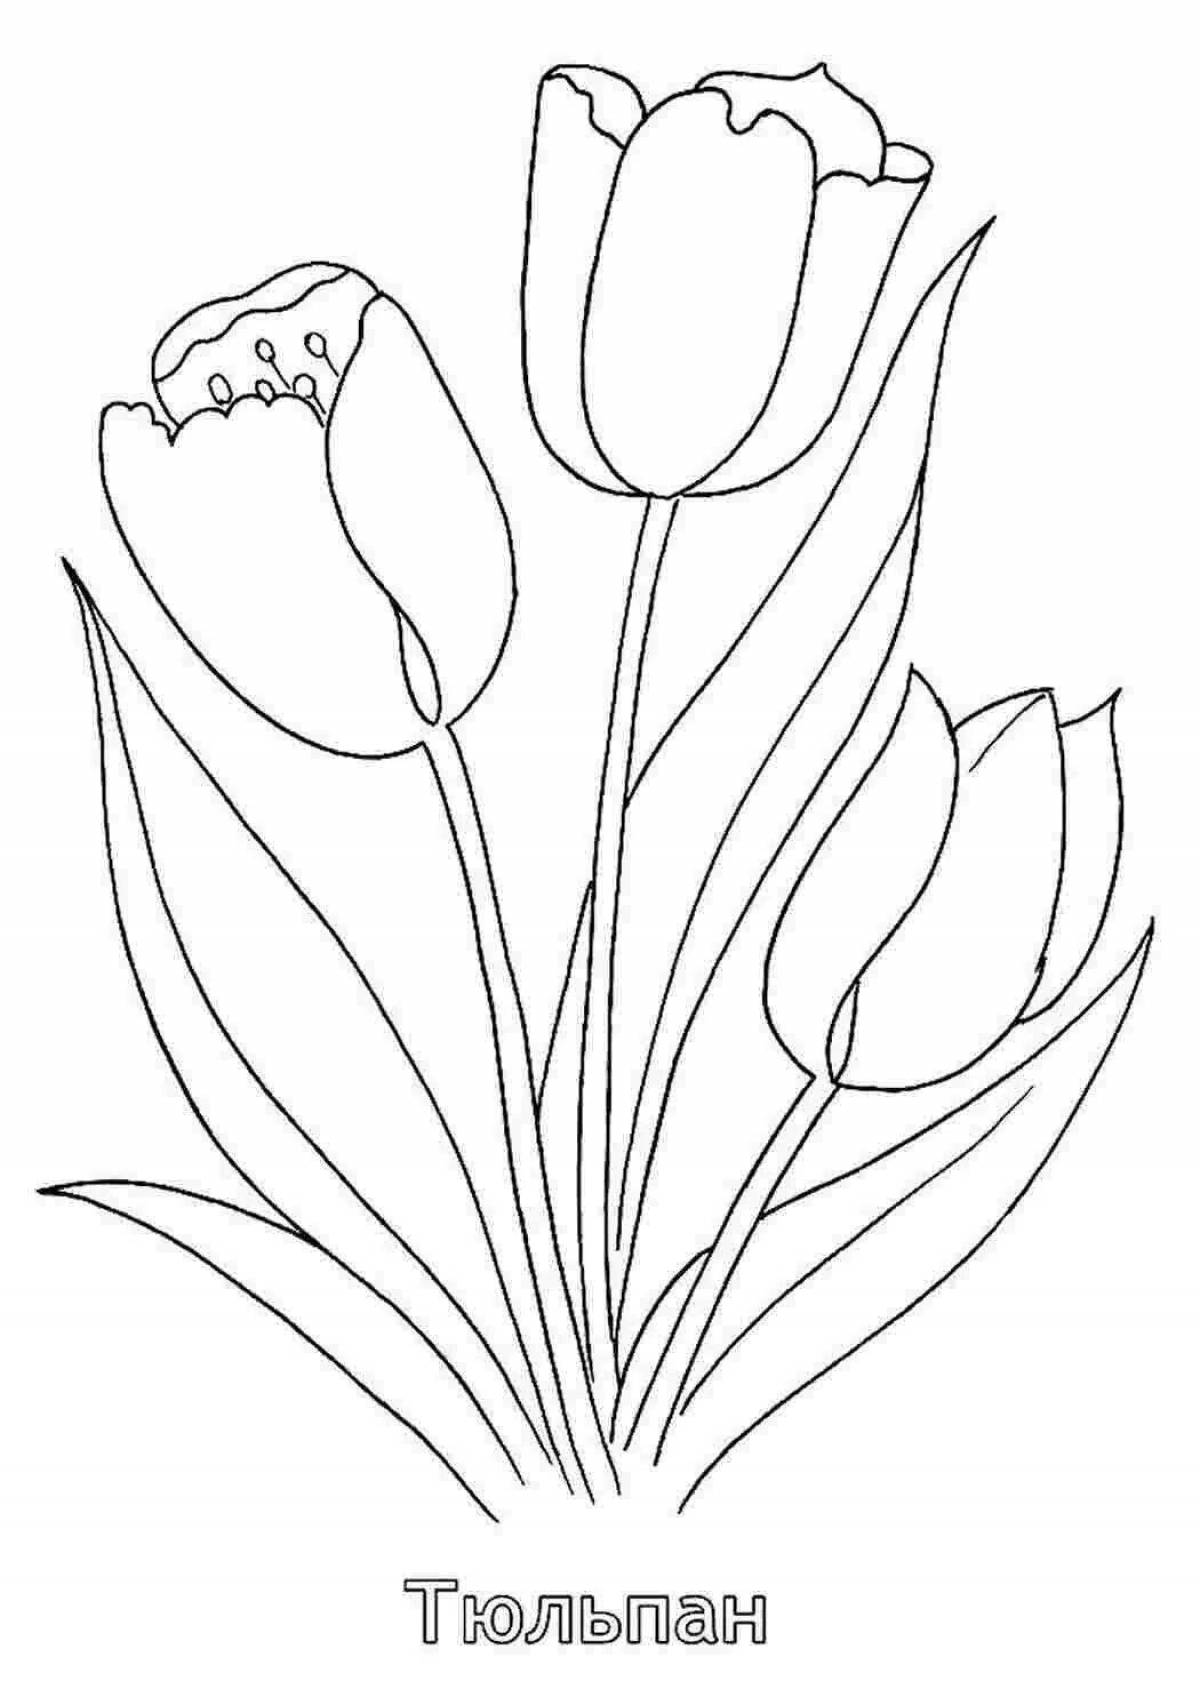 Coloring page joyful spring tulips